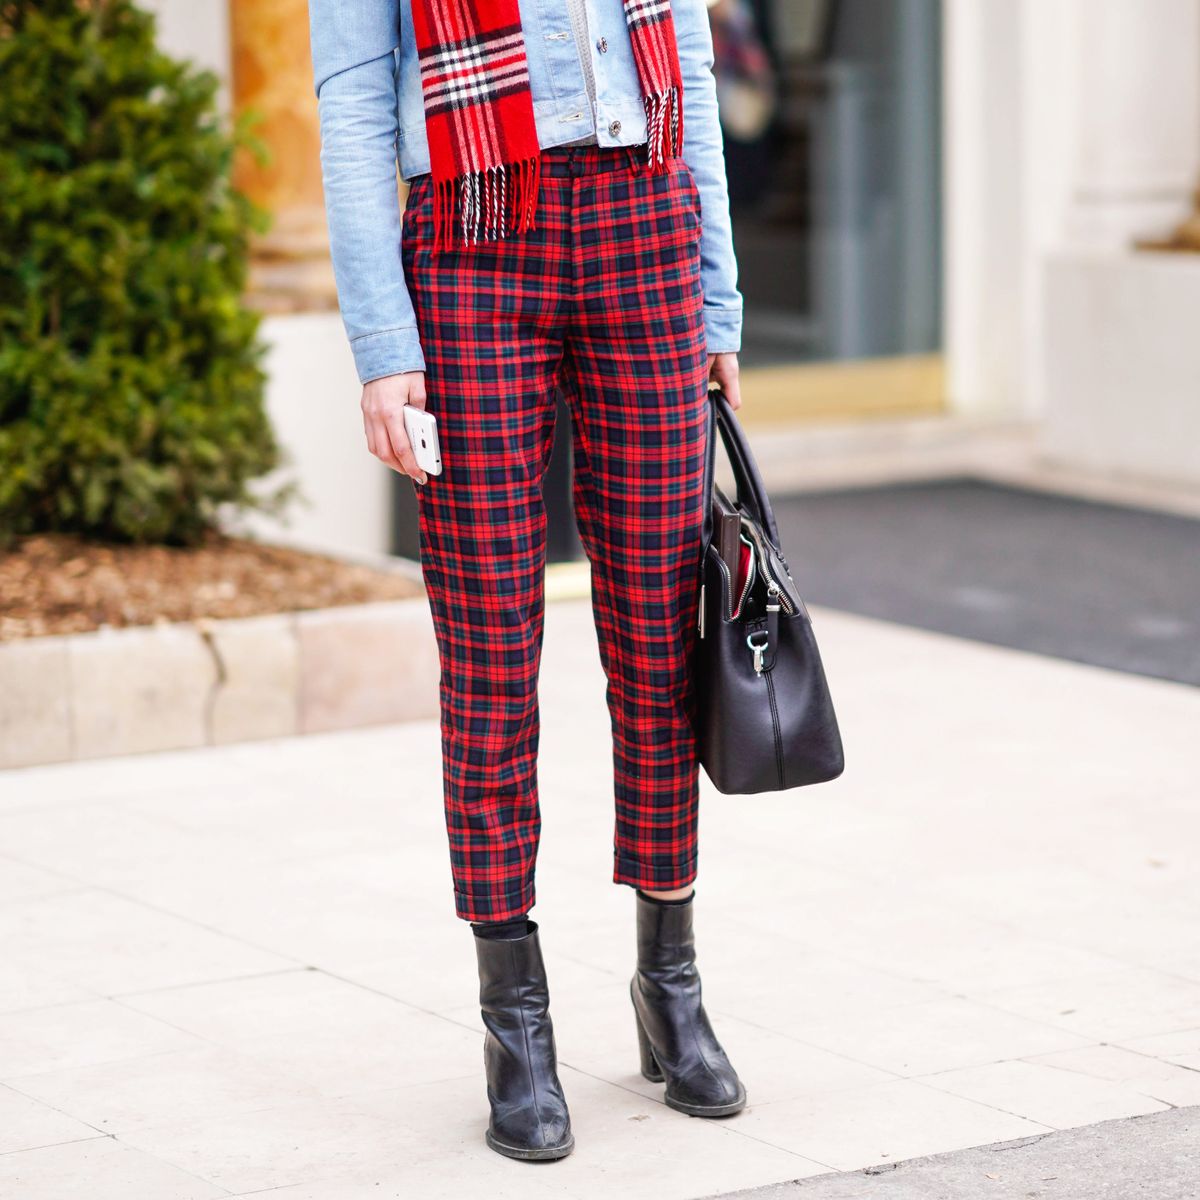 Trendy Women's Formal Wear Street Fashion Tartan Plaid Cigarette pants  Holiday Outfits Ideas - YouTube